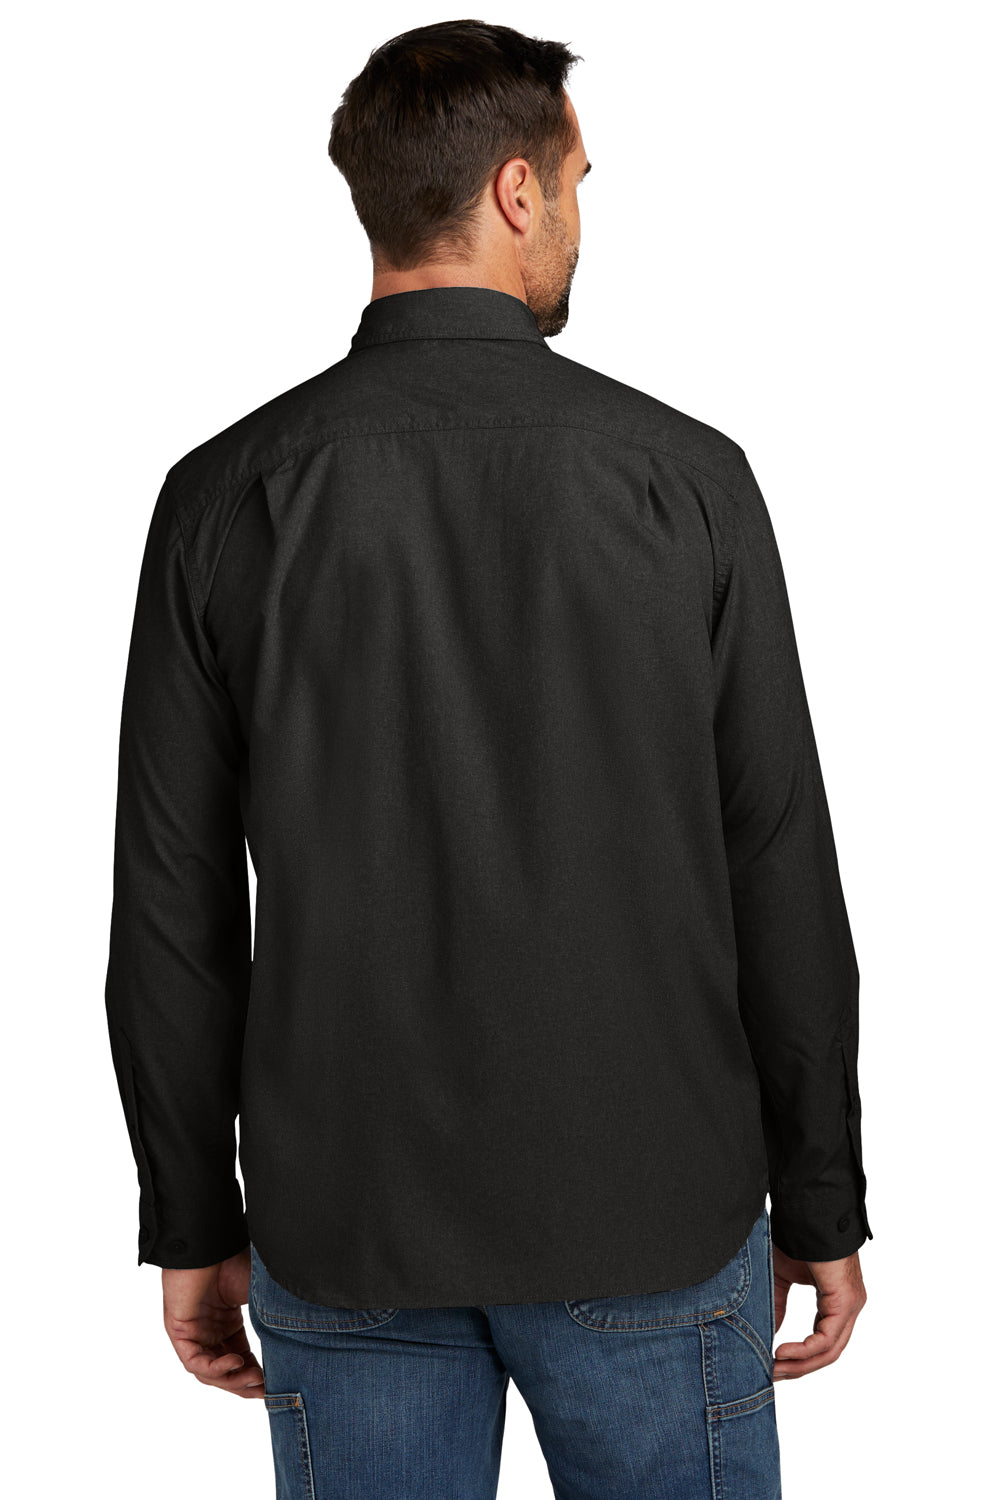 Carhartt CT105291 Mens Force Moisture Wicking Long Sleeve Button Down Shirt w/ Double Pockets Black Model Back